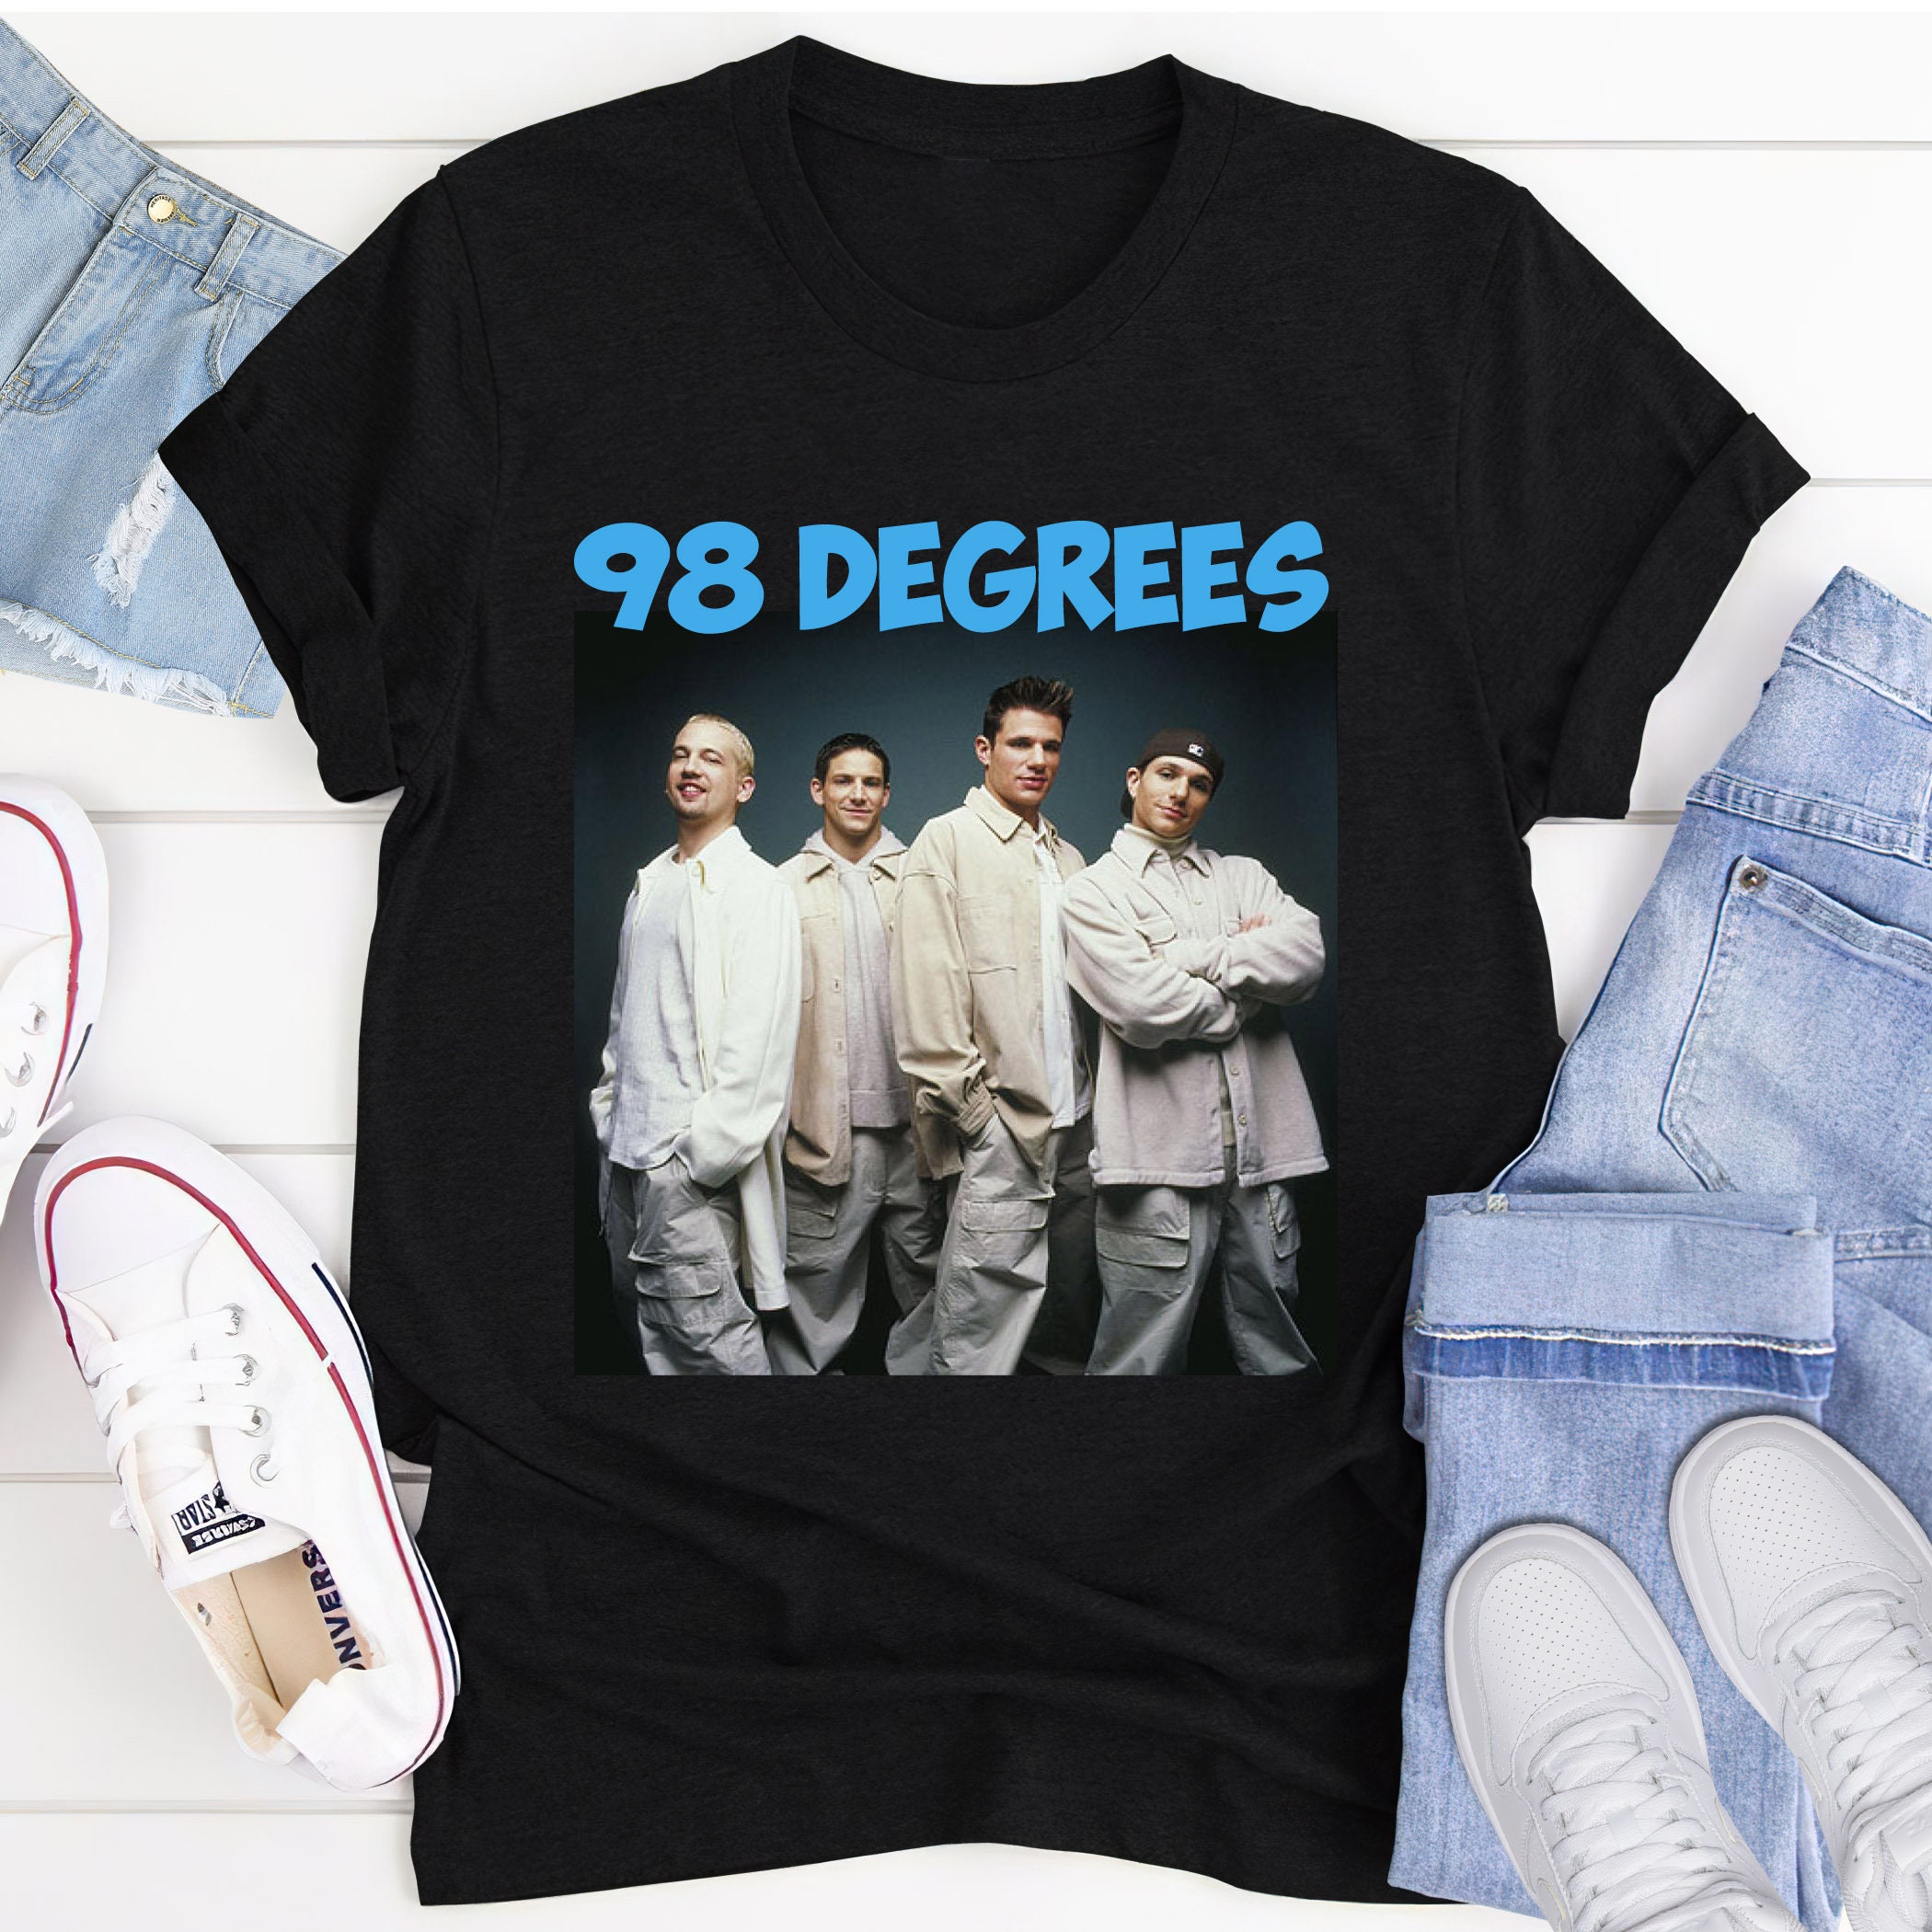 98 degrees tour merchandise